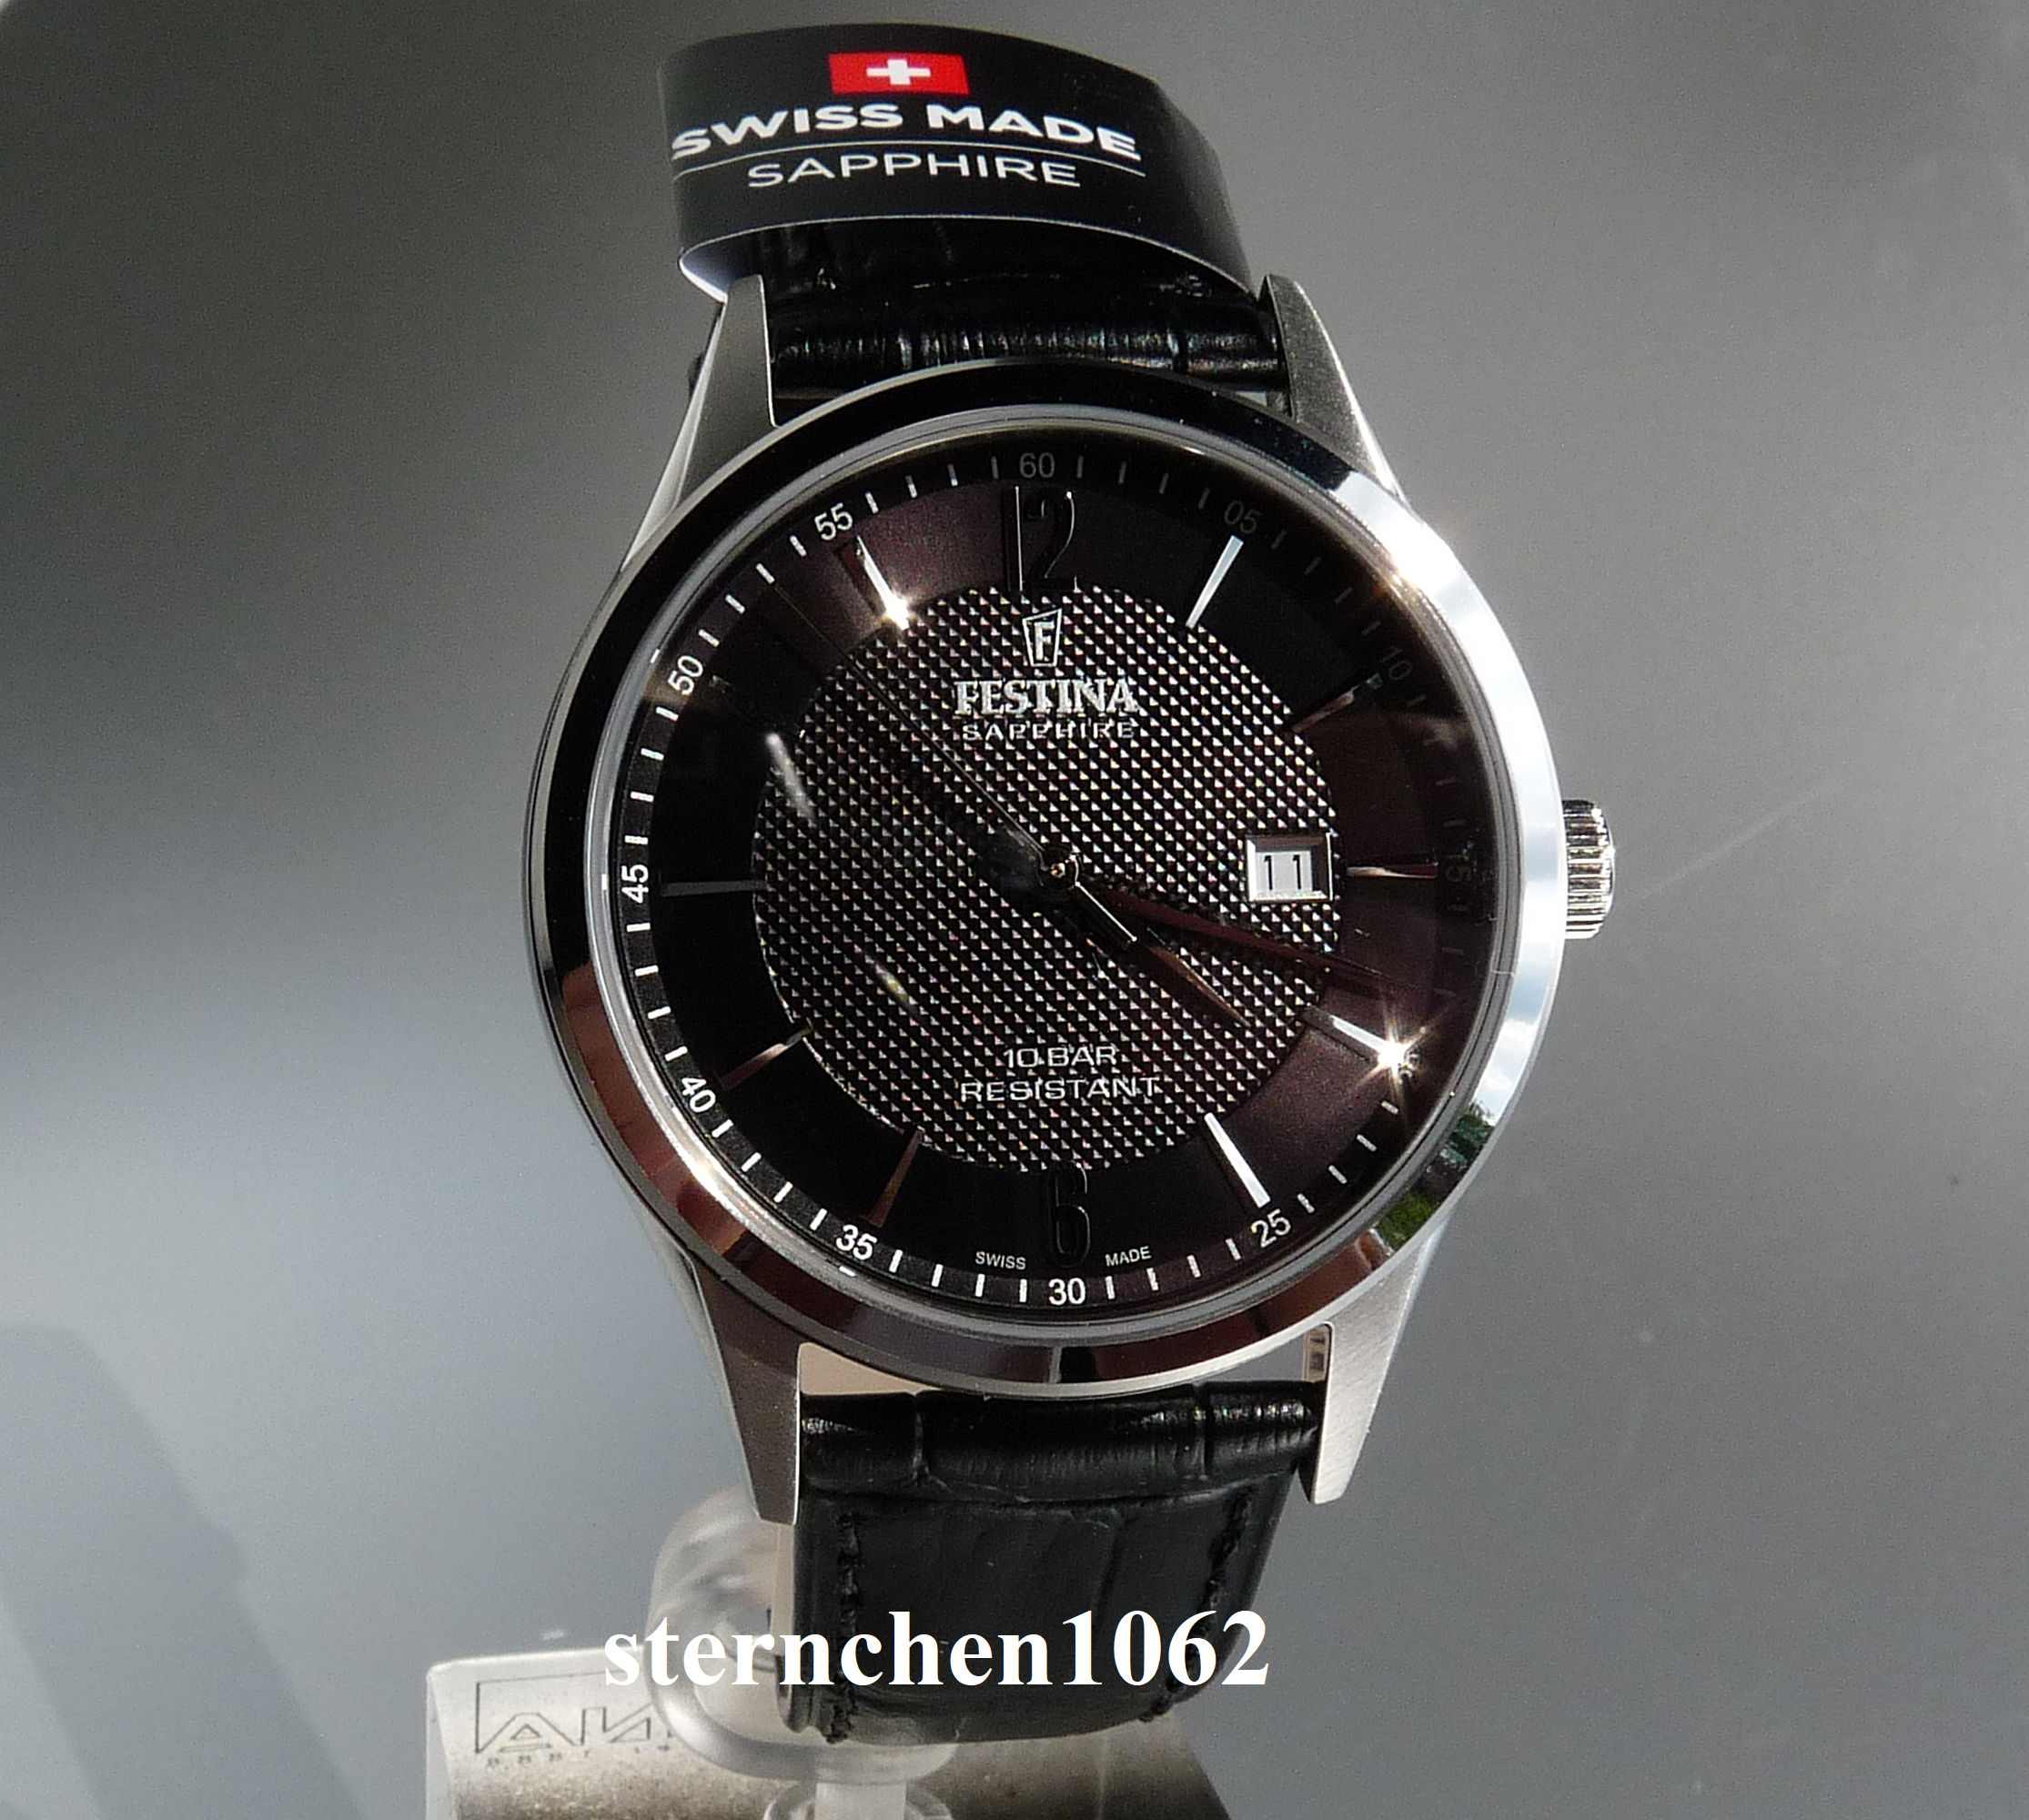 Sternchen 1062 - Festina * Made F20007/4 Swiss * 